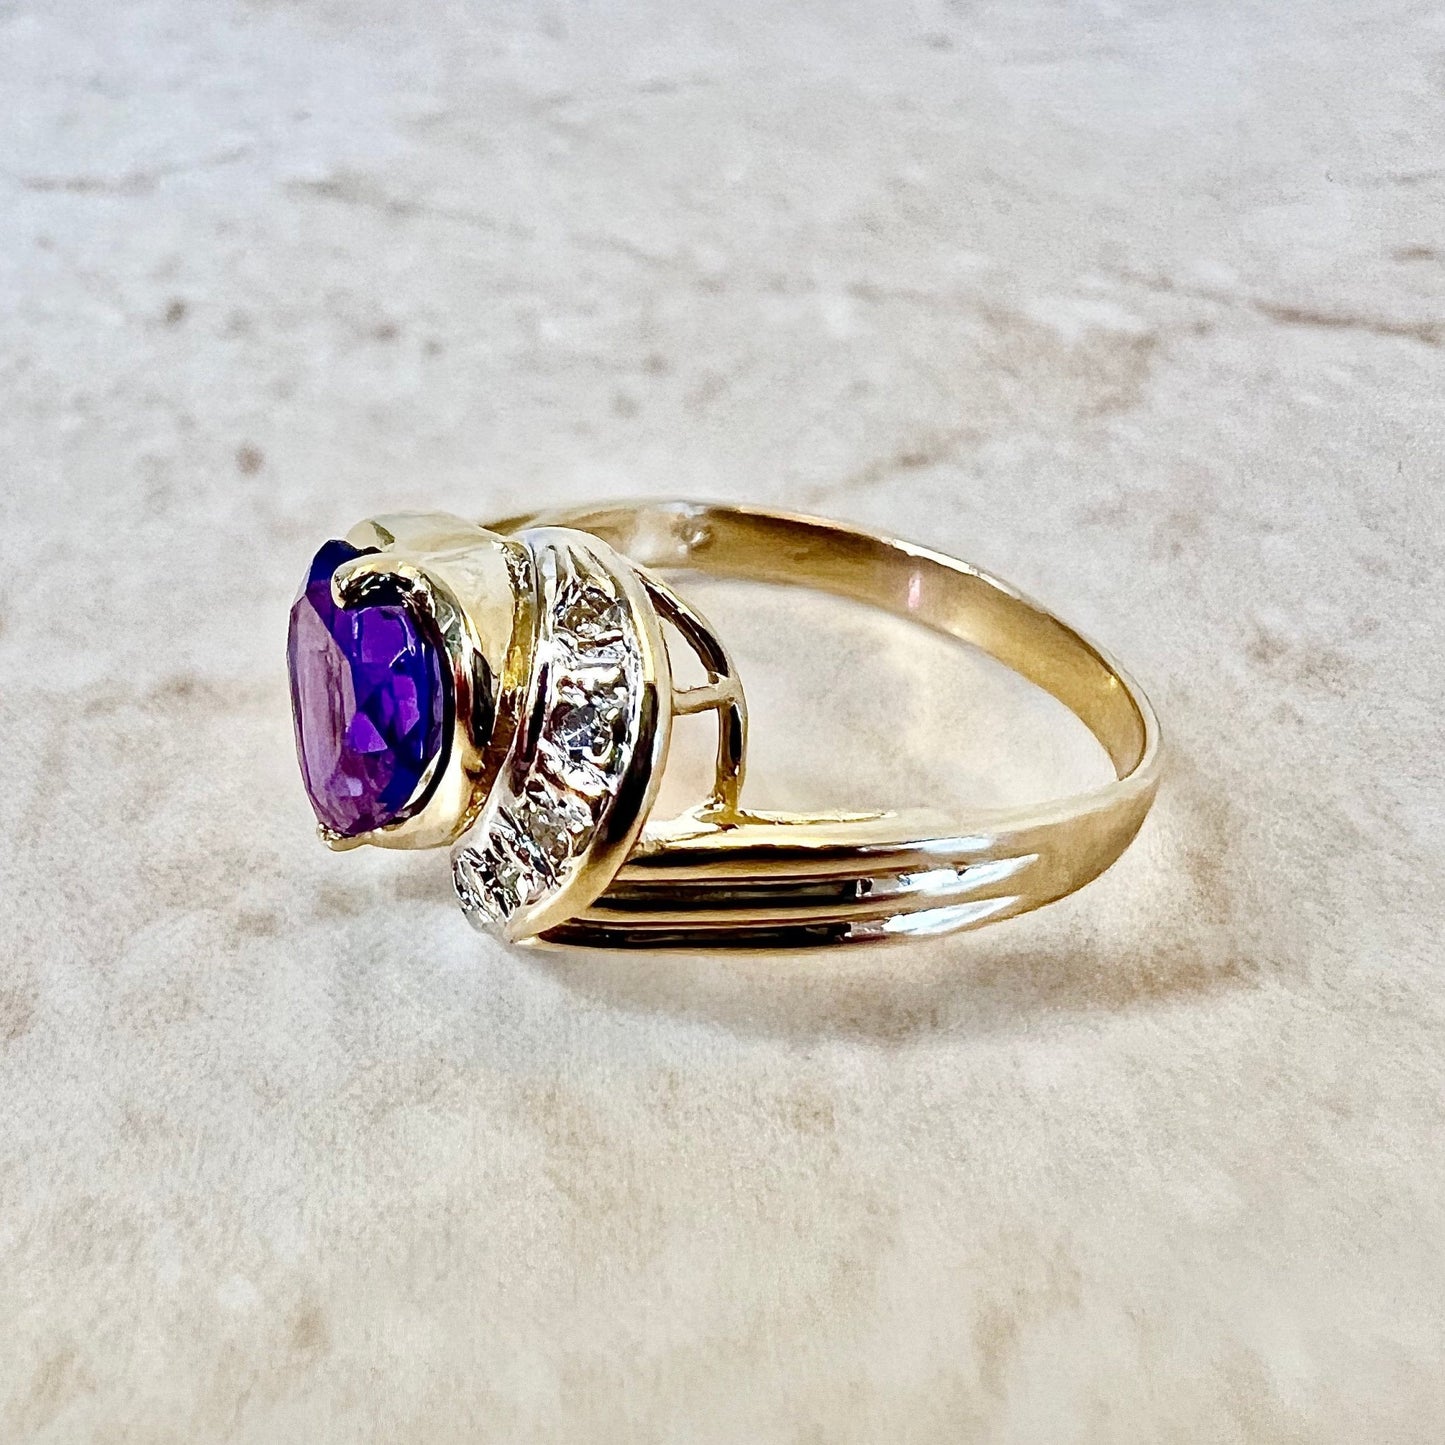 14K Amethyst & Diamond Heart Ring - Yellow Gold Amethyst Ring - Birthday Gift - February Birthstone - Best Valentine’s Day Gifts For Her